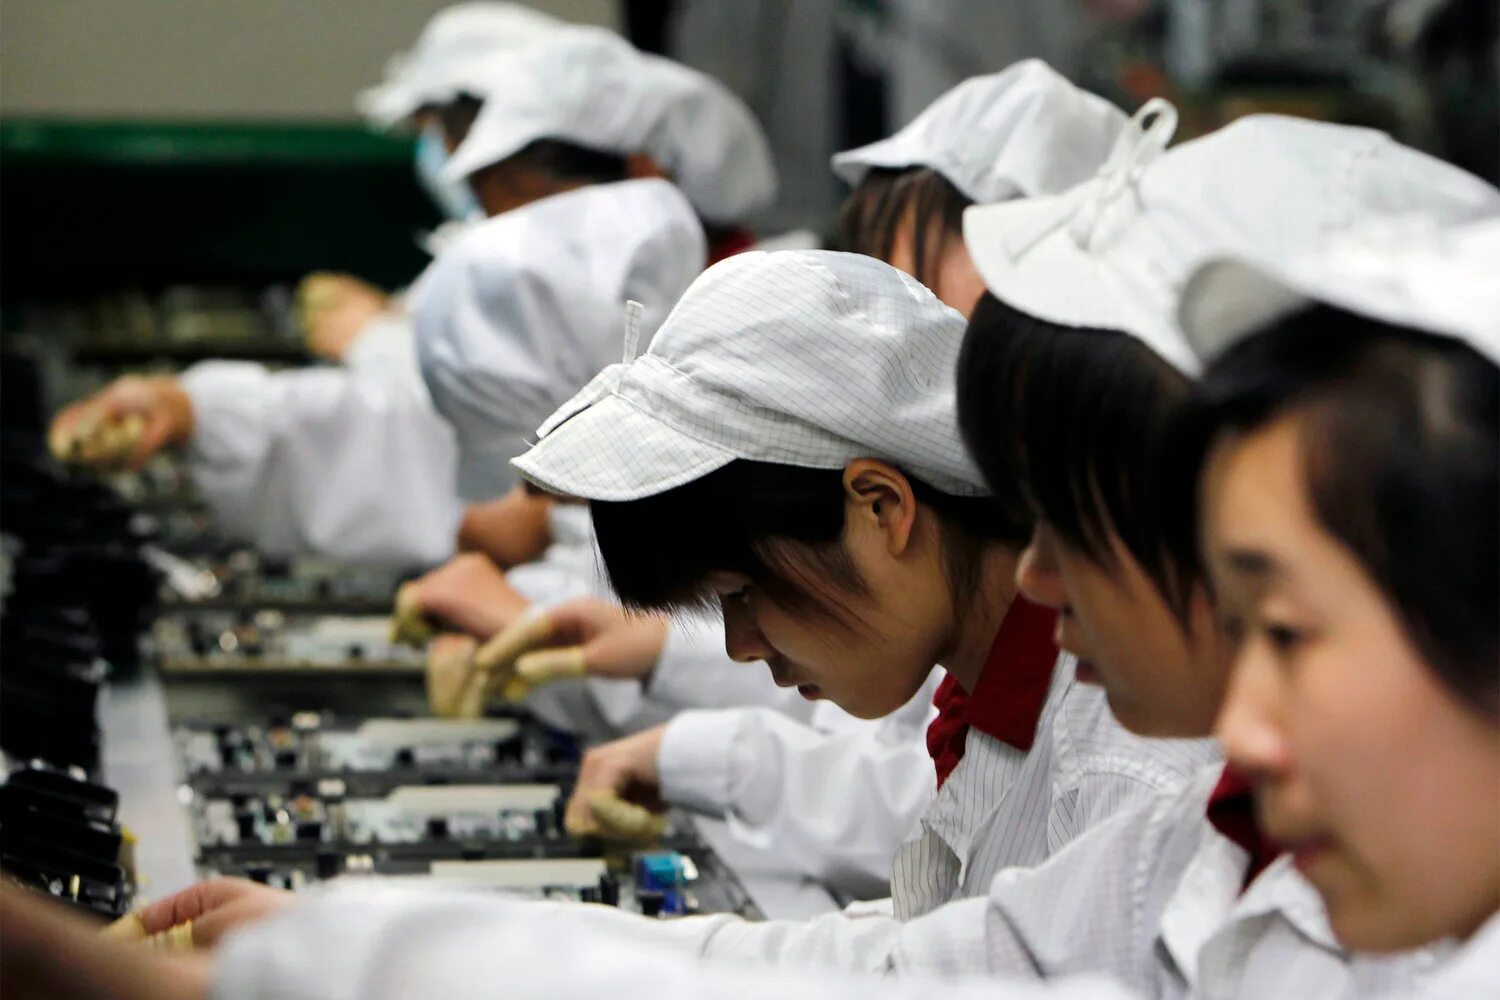 Китайский завод по производству. Фабрика Фоксконн Китай. Завод Foxconn в Китае. Китайцы на заводе. Труд в Китае.